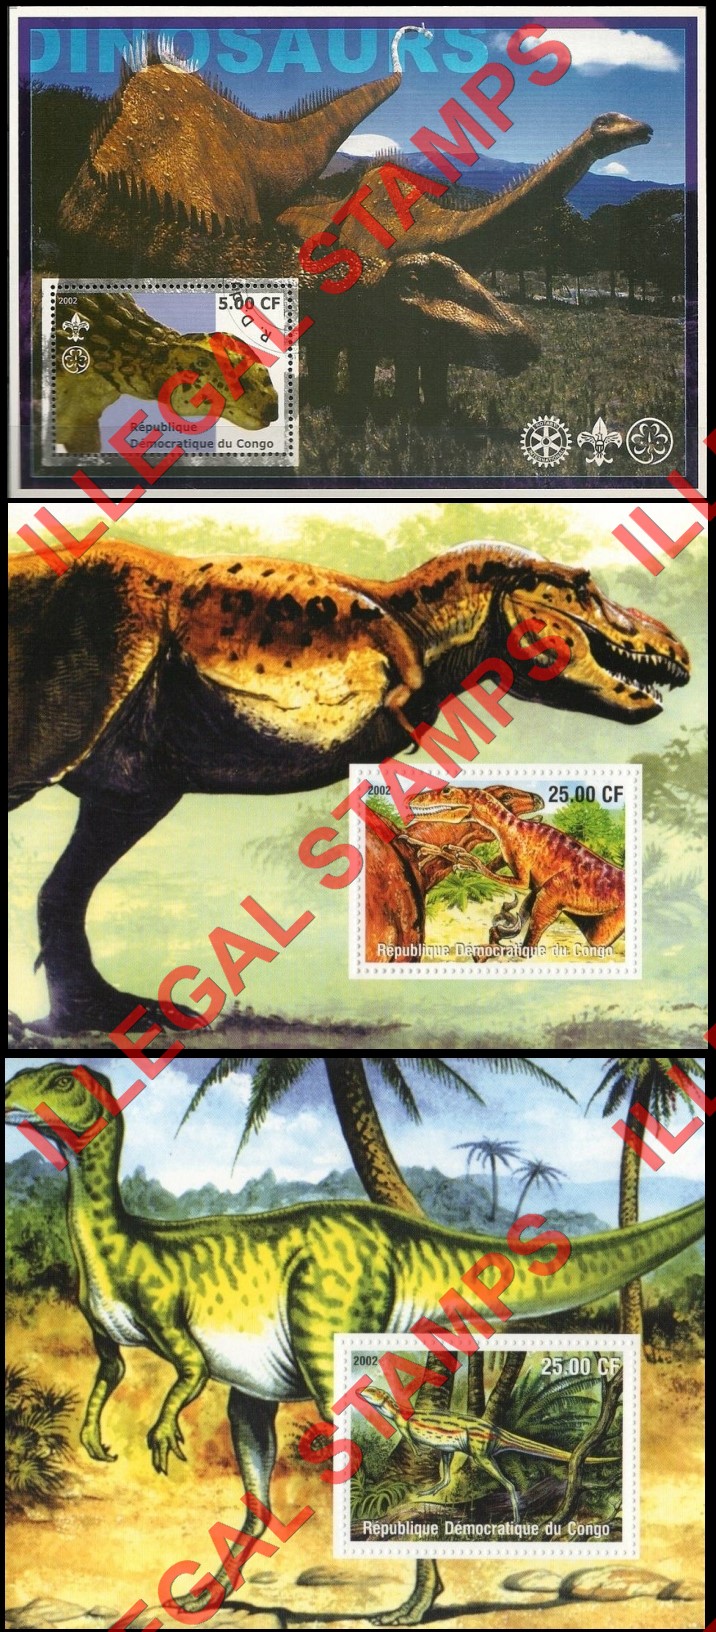 Congo Democratic Republic 2002 Dinosaurs Illegal Stamp Souvenir Sheets of 1 (Part 4)